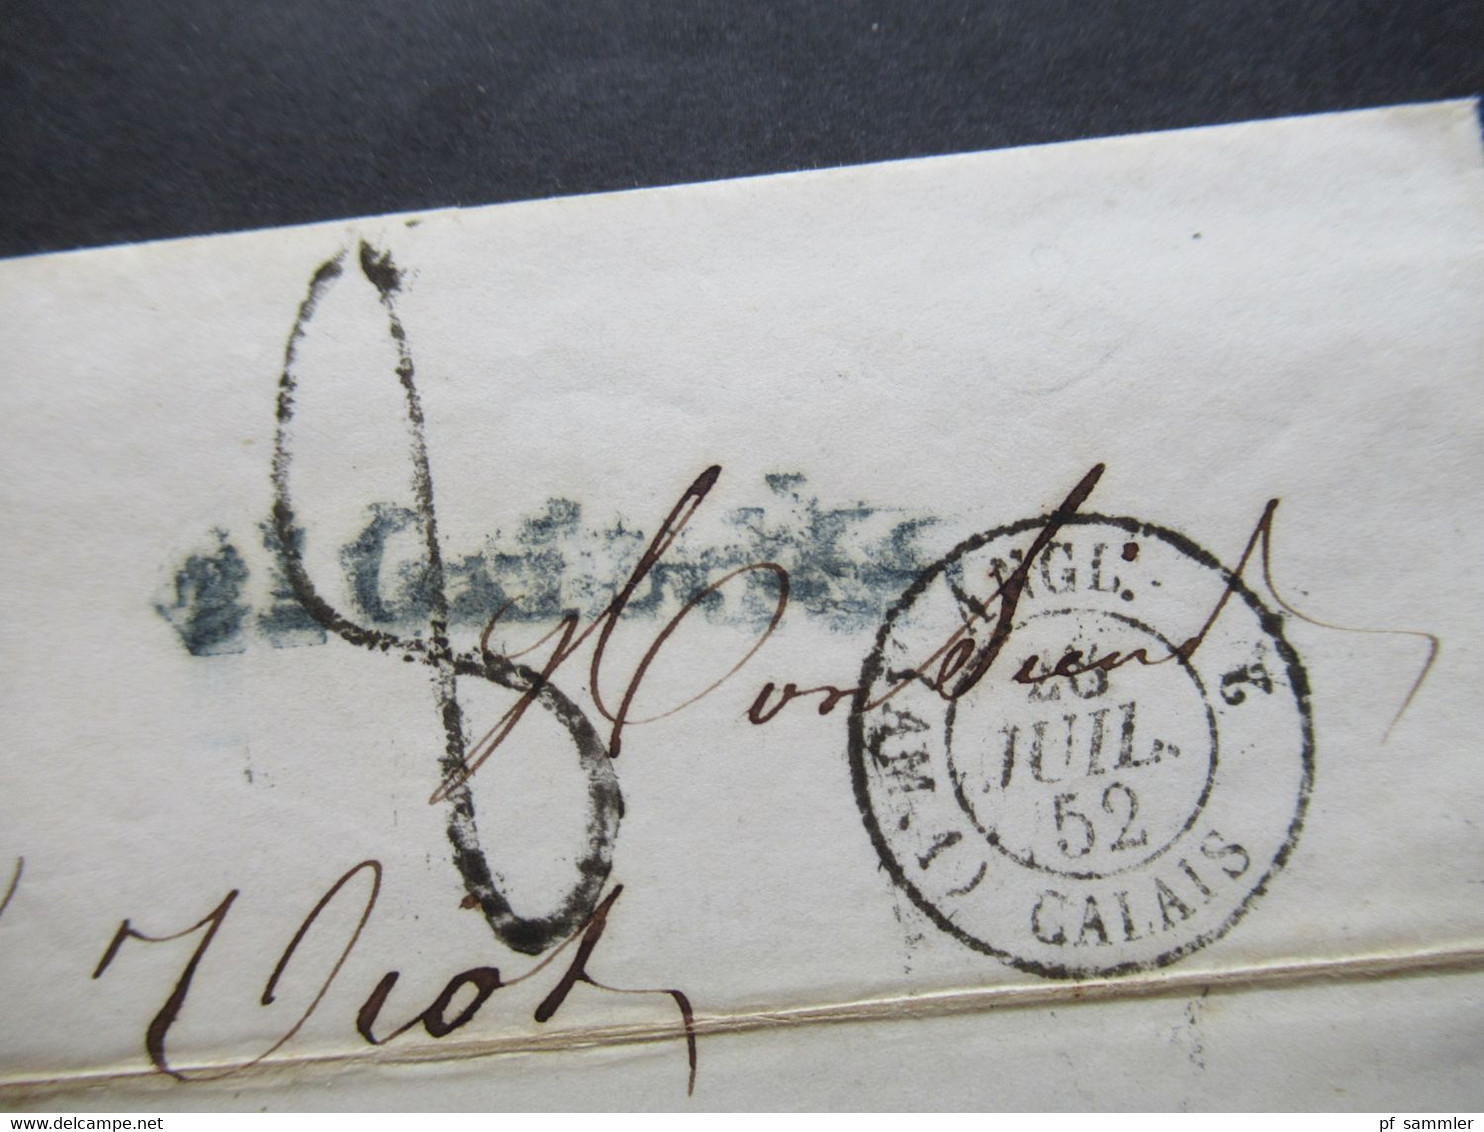 GB London 1852 Stempel B S Mit Krone Und Blauer L1 Oxford / Angl AM 1 Calais 2 über Paris Nach Nantes - Cartas & Documentos